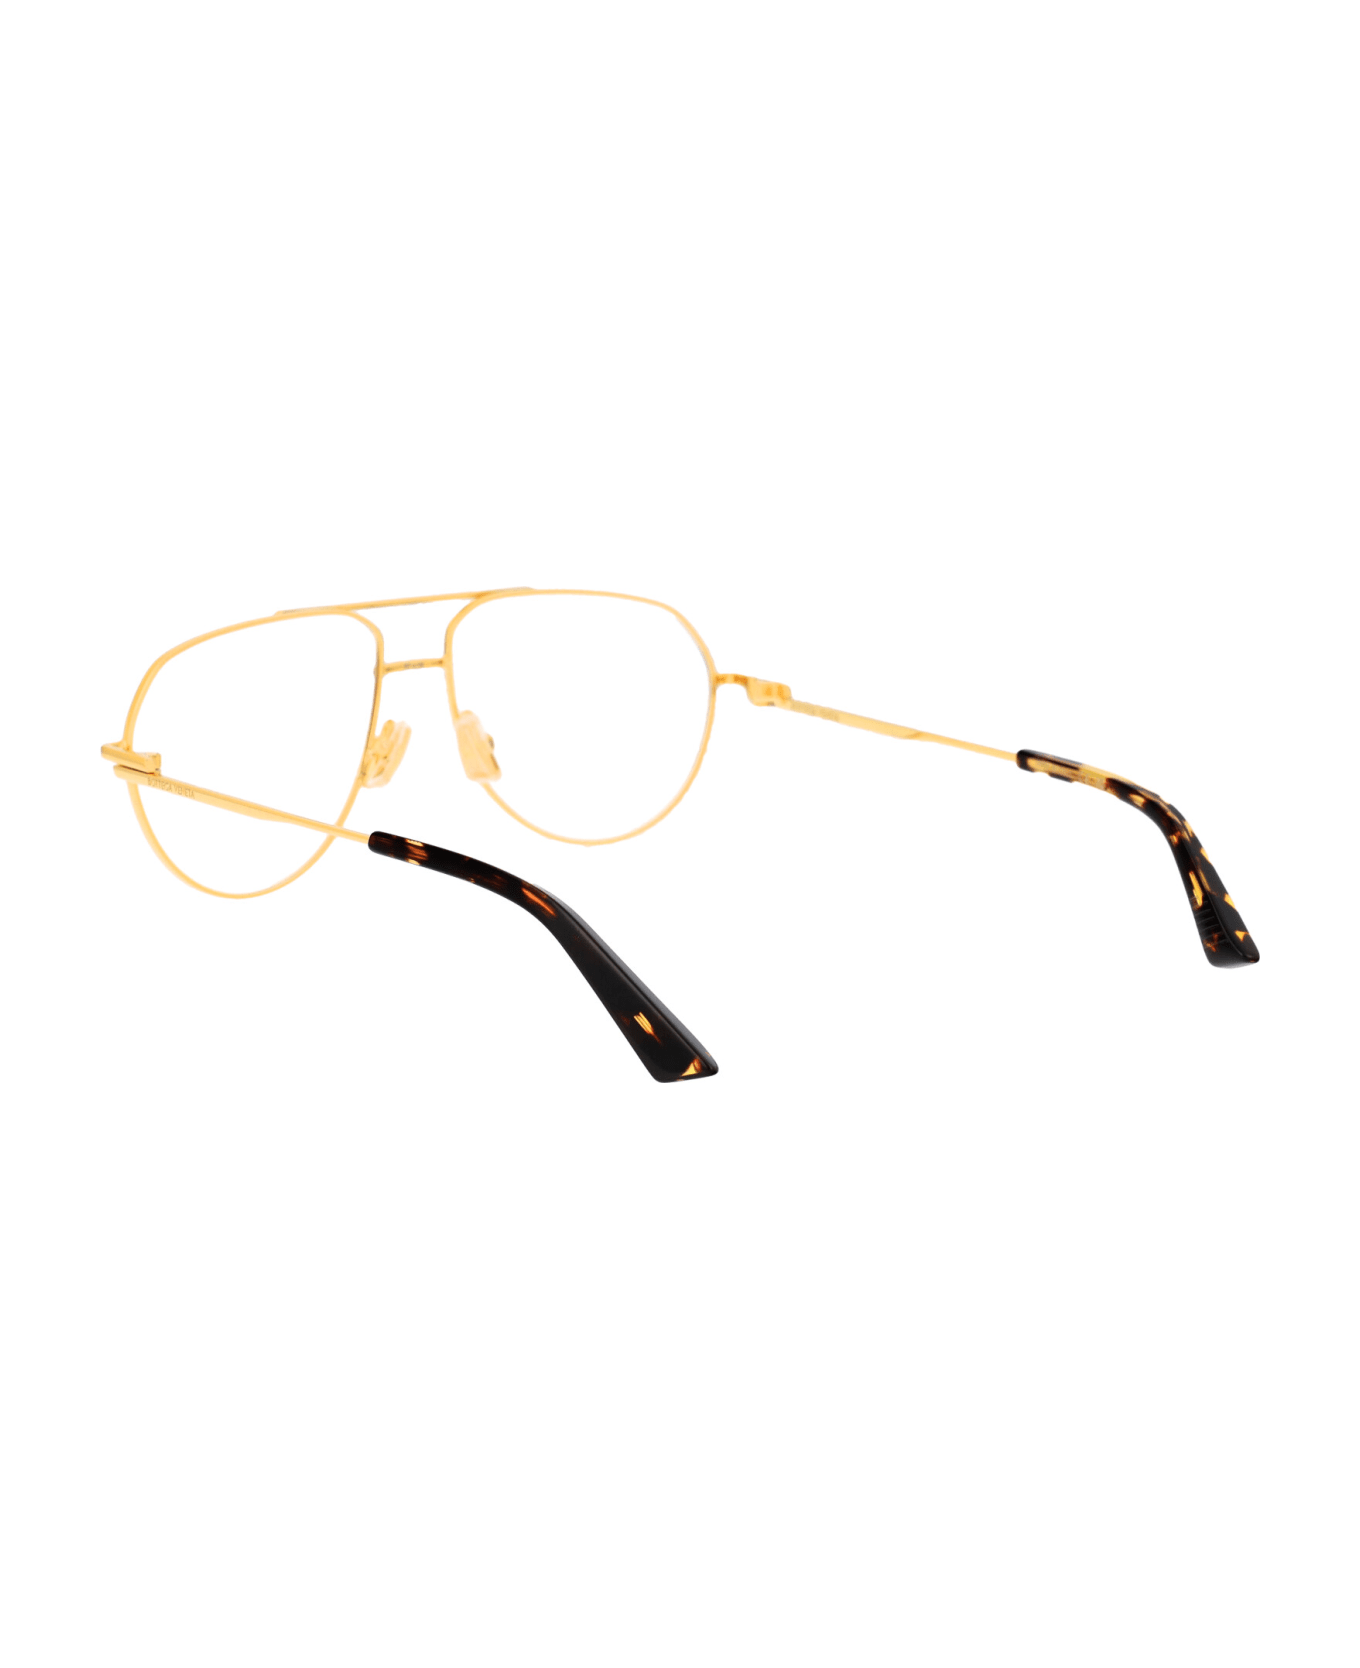 Bottega Veneta Eyewear Bv1302o Glasses - 001 GOLD GOLD TRANSPARENT